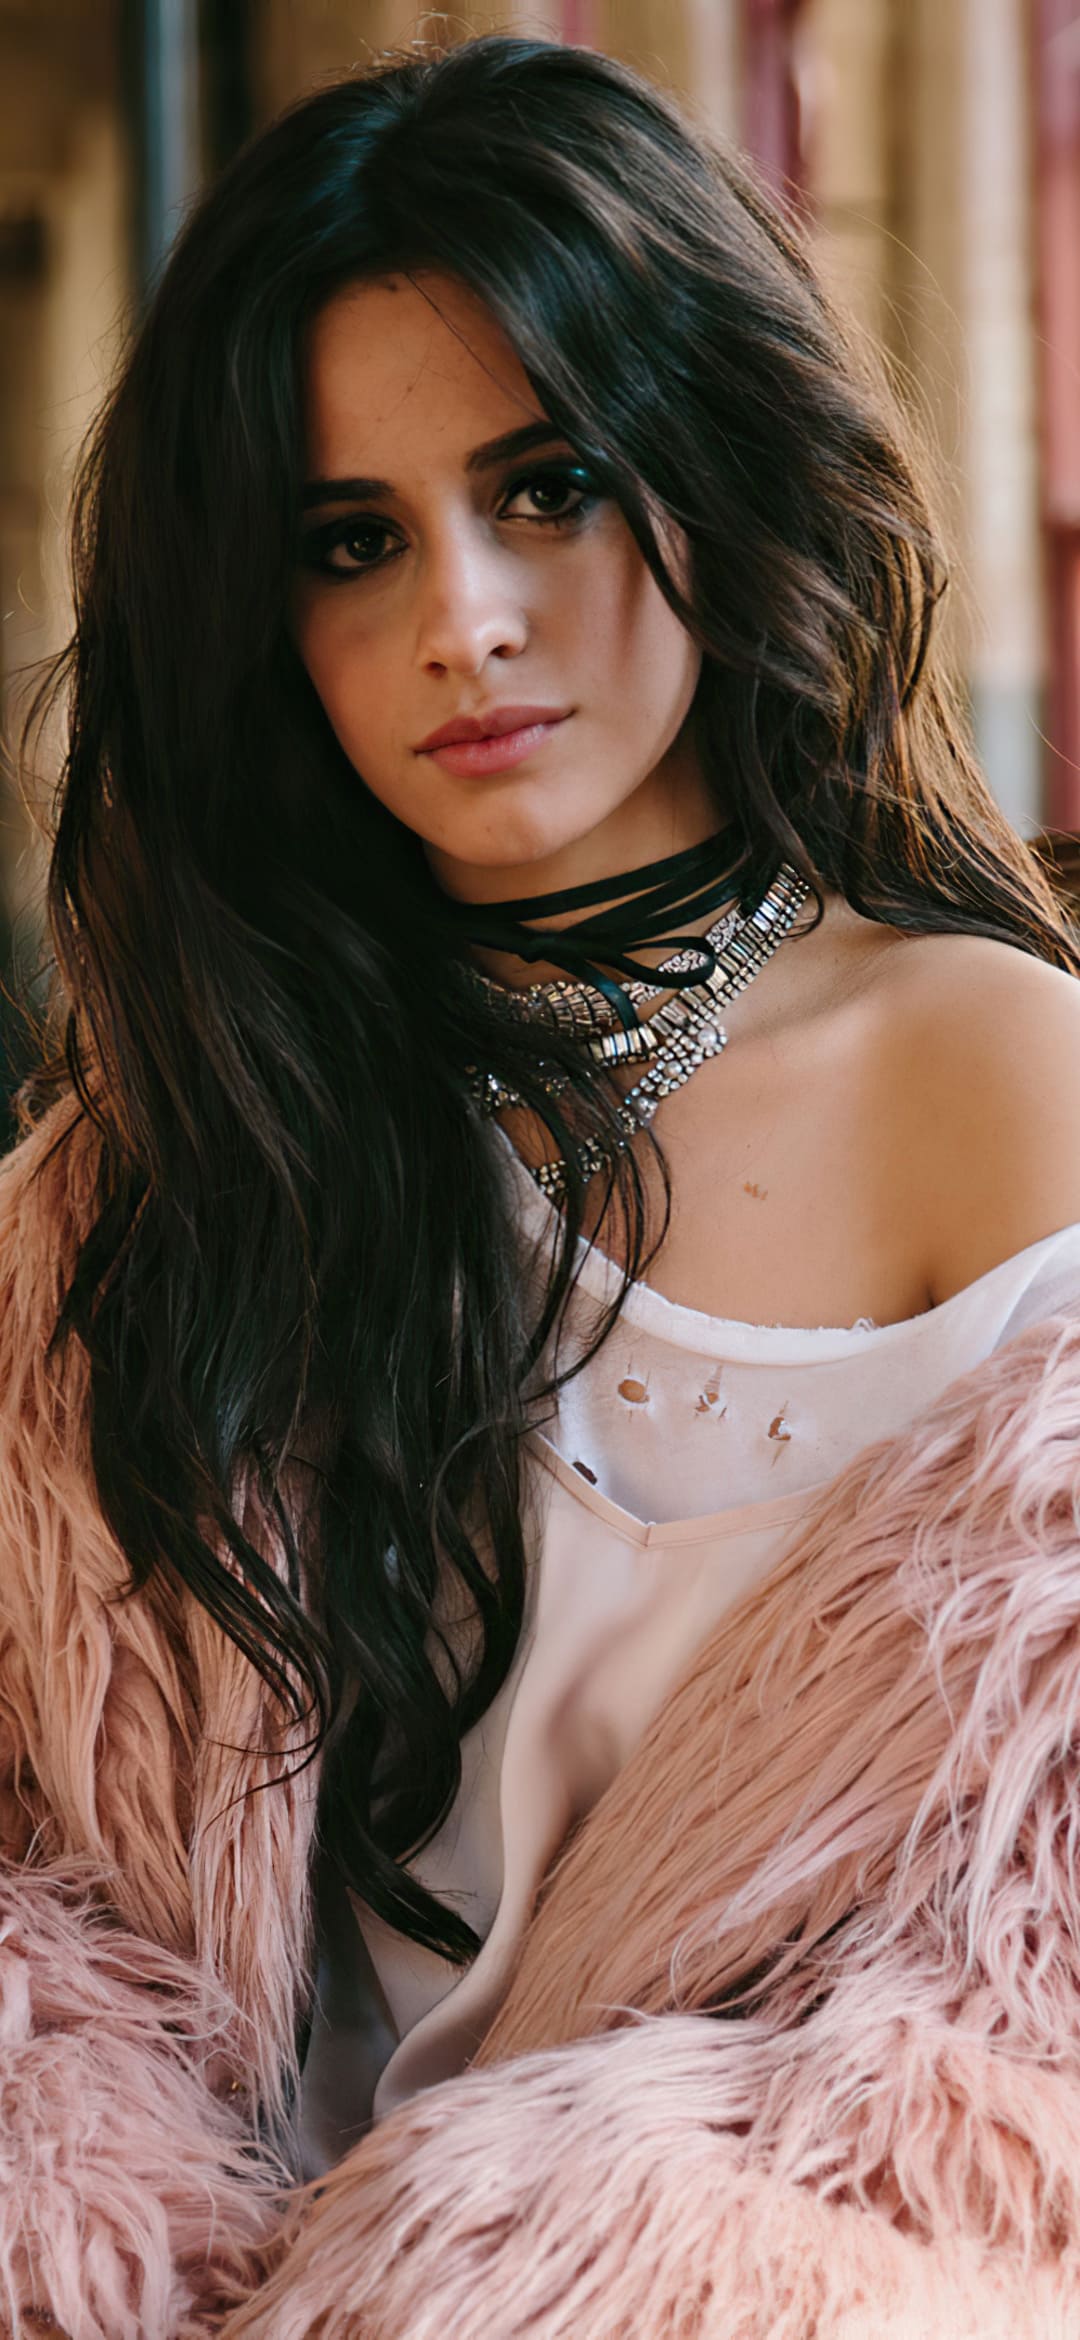 Camila Cabello Wallpapers - Top 35 Best Camila Cabello Pictures & Photos  Download